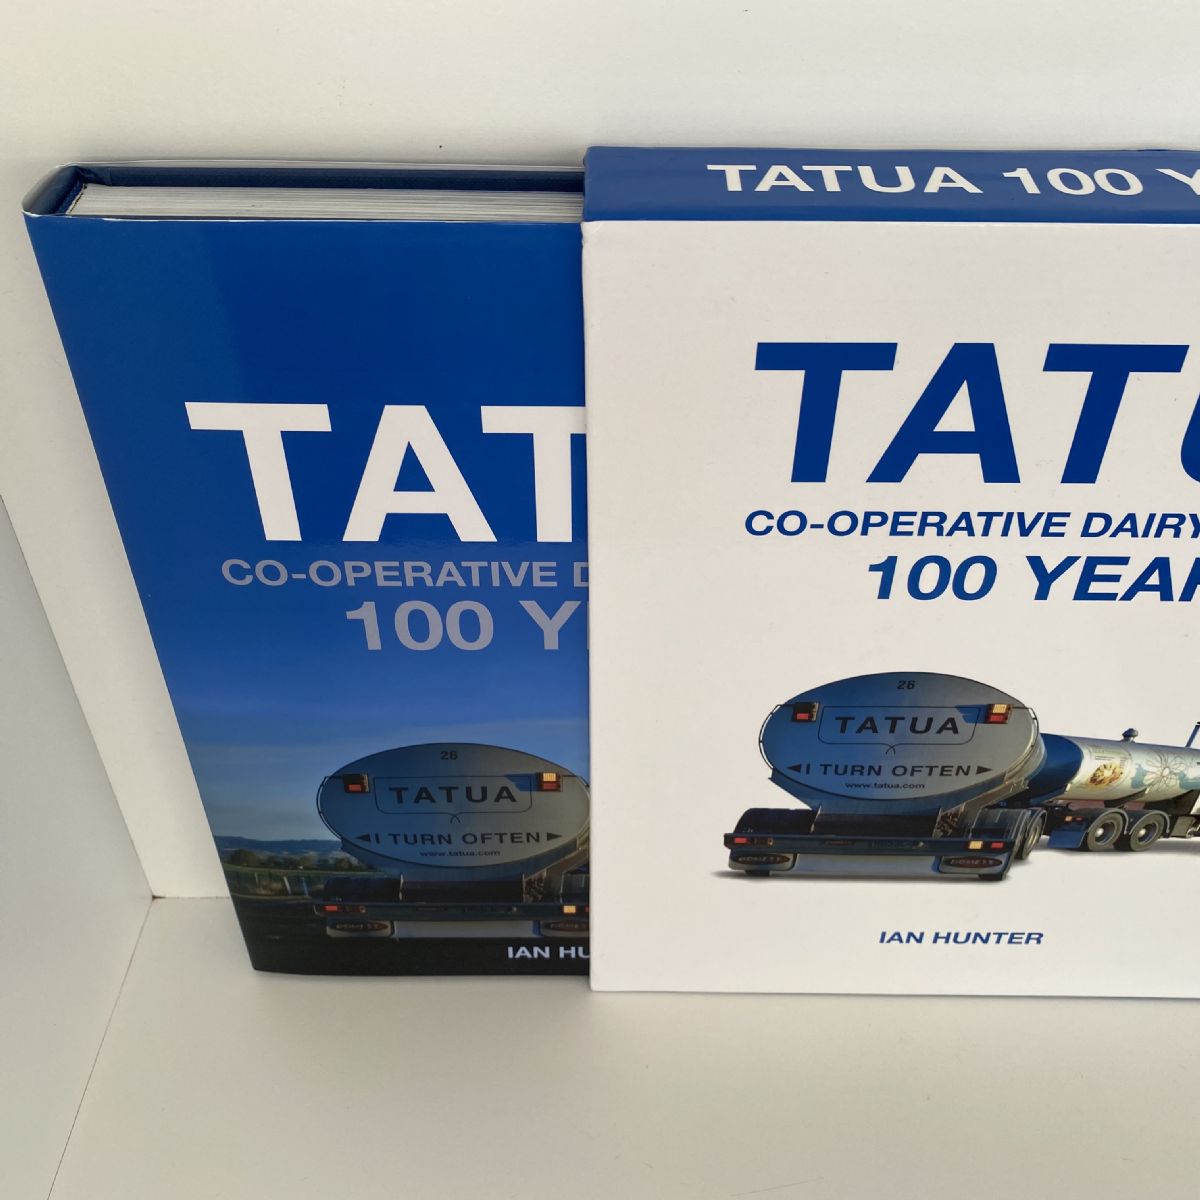 TATUA Co-operative Dairy Company : 100 Years